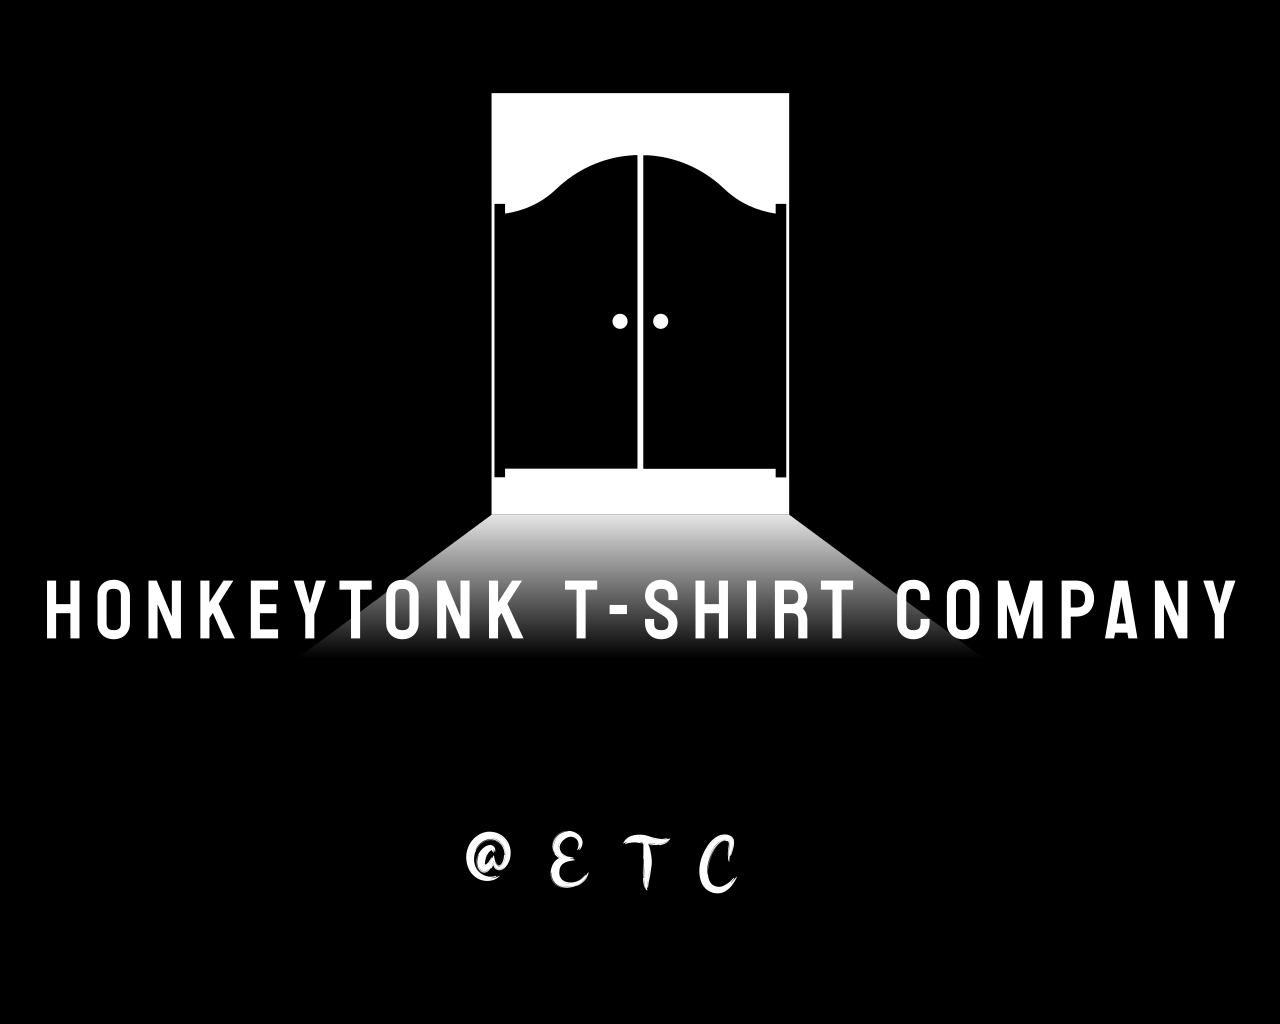 Honkey tonk T-shirt co &etc's web page